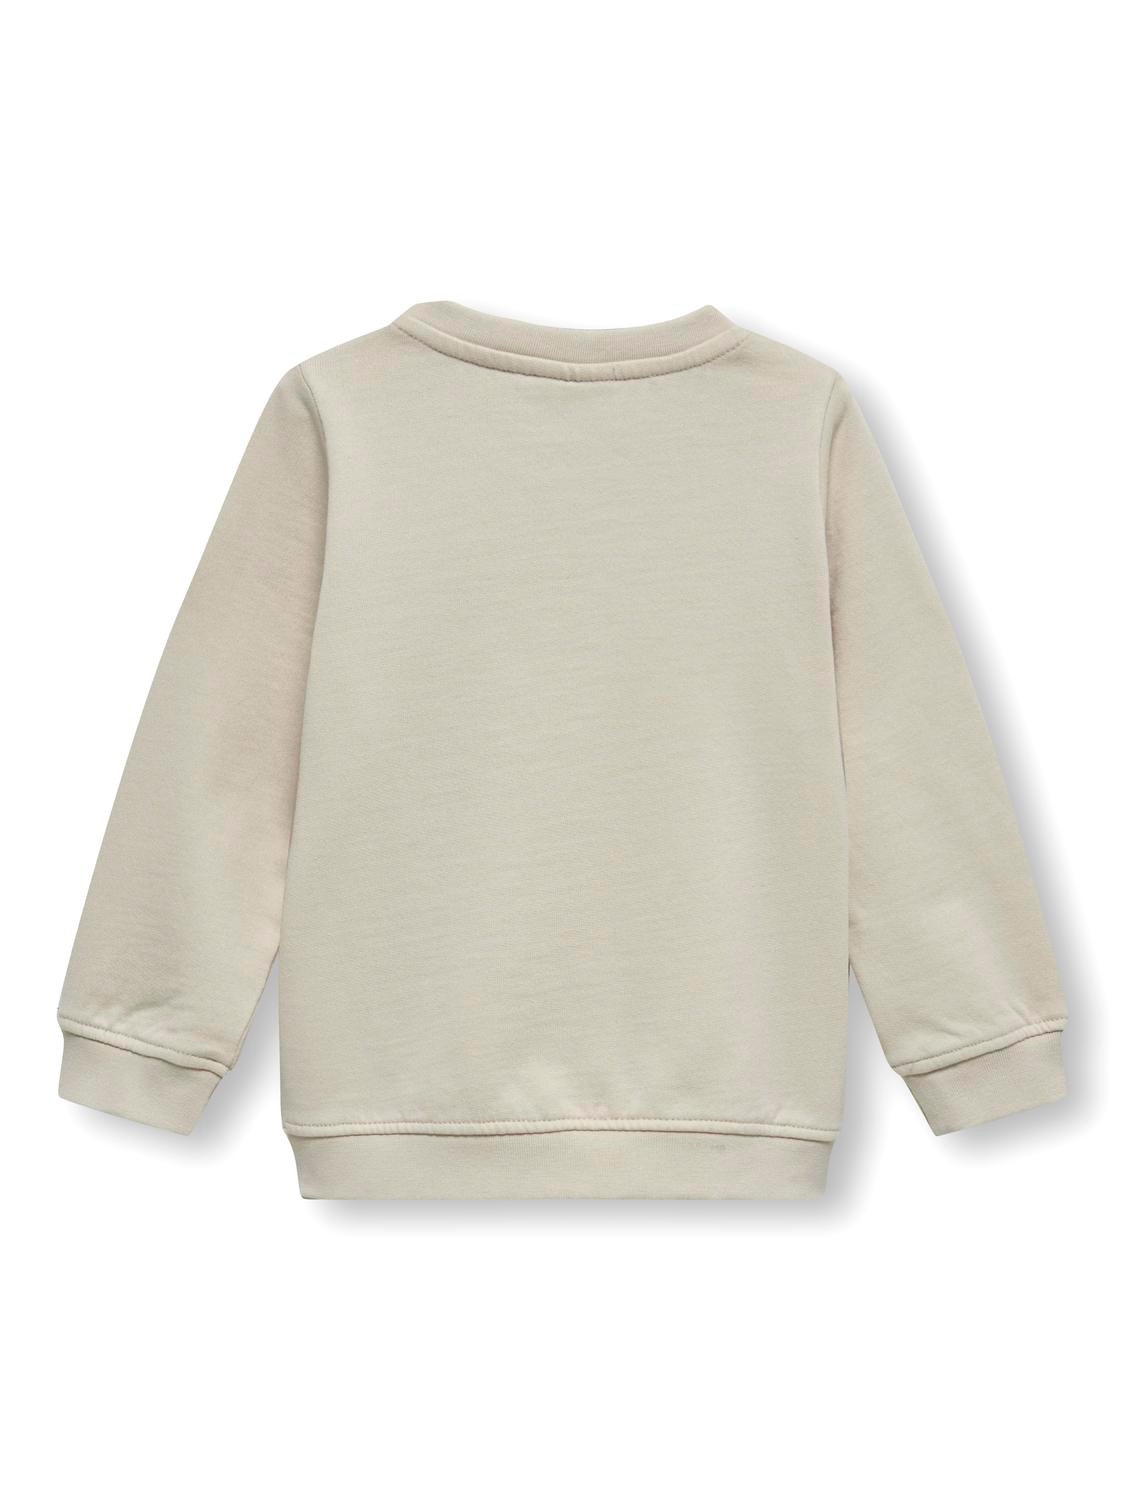 ONLY Mini sweatshirt with print -Pumice Stone - 15303364